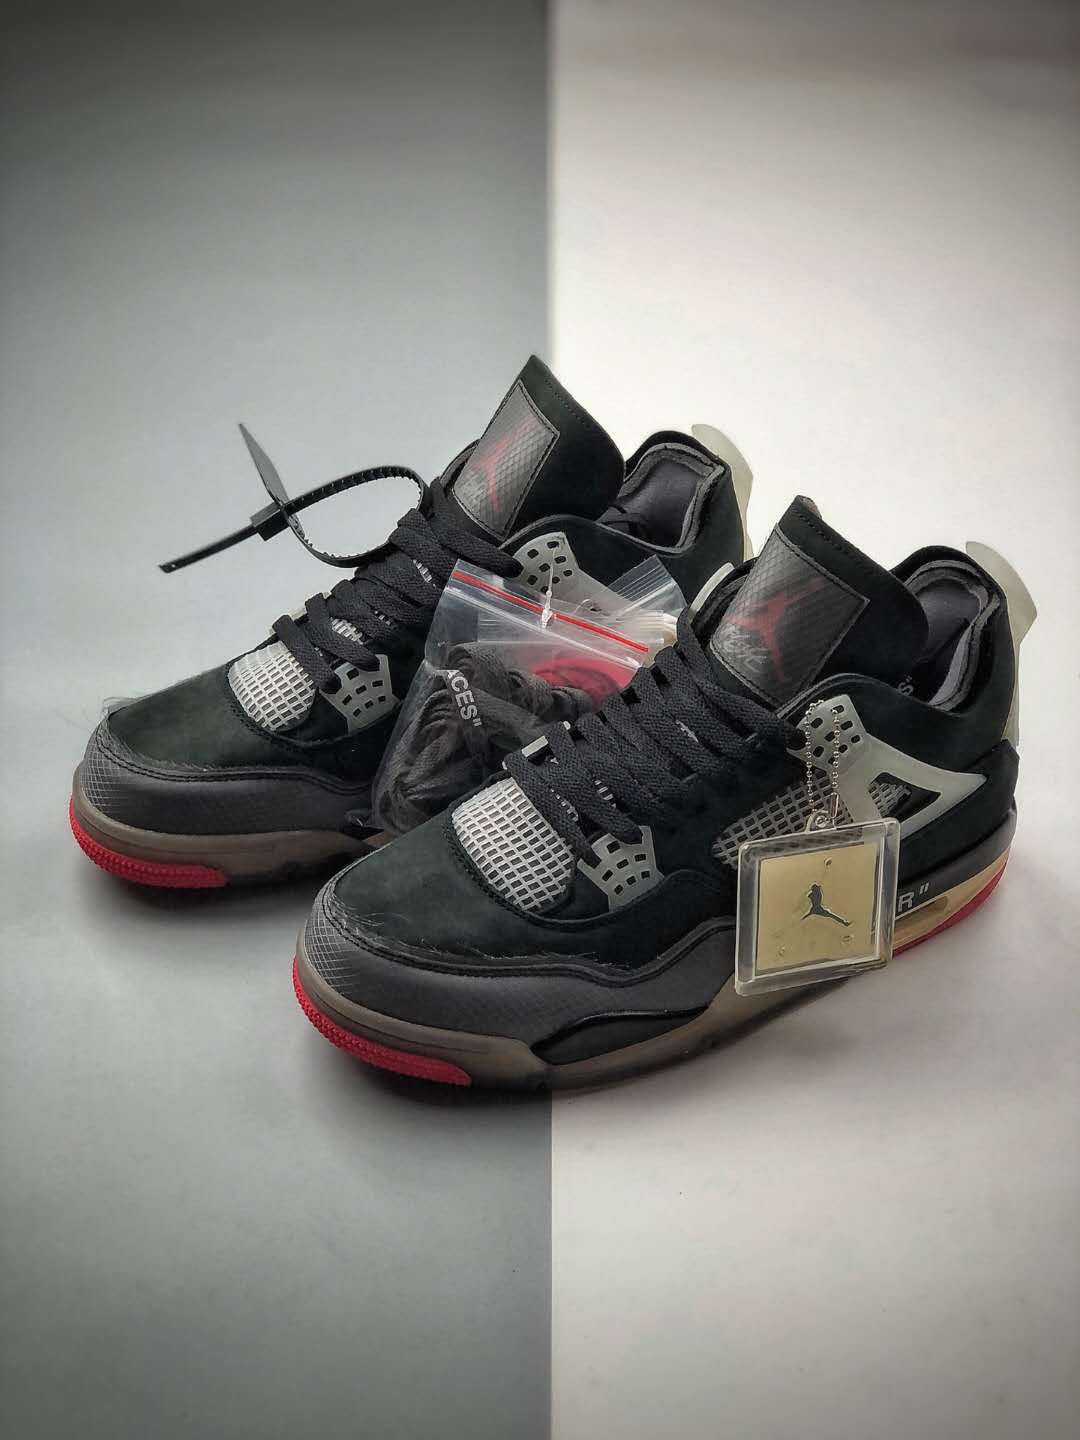 Off-White x Air Jordan 4 Retro Black - Limited Edition Sneakers